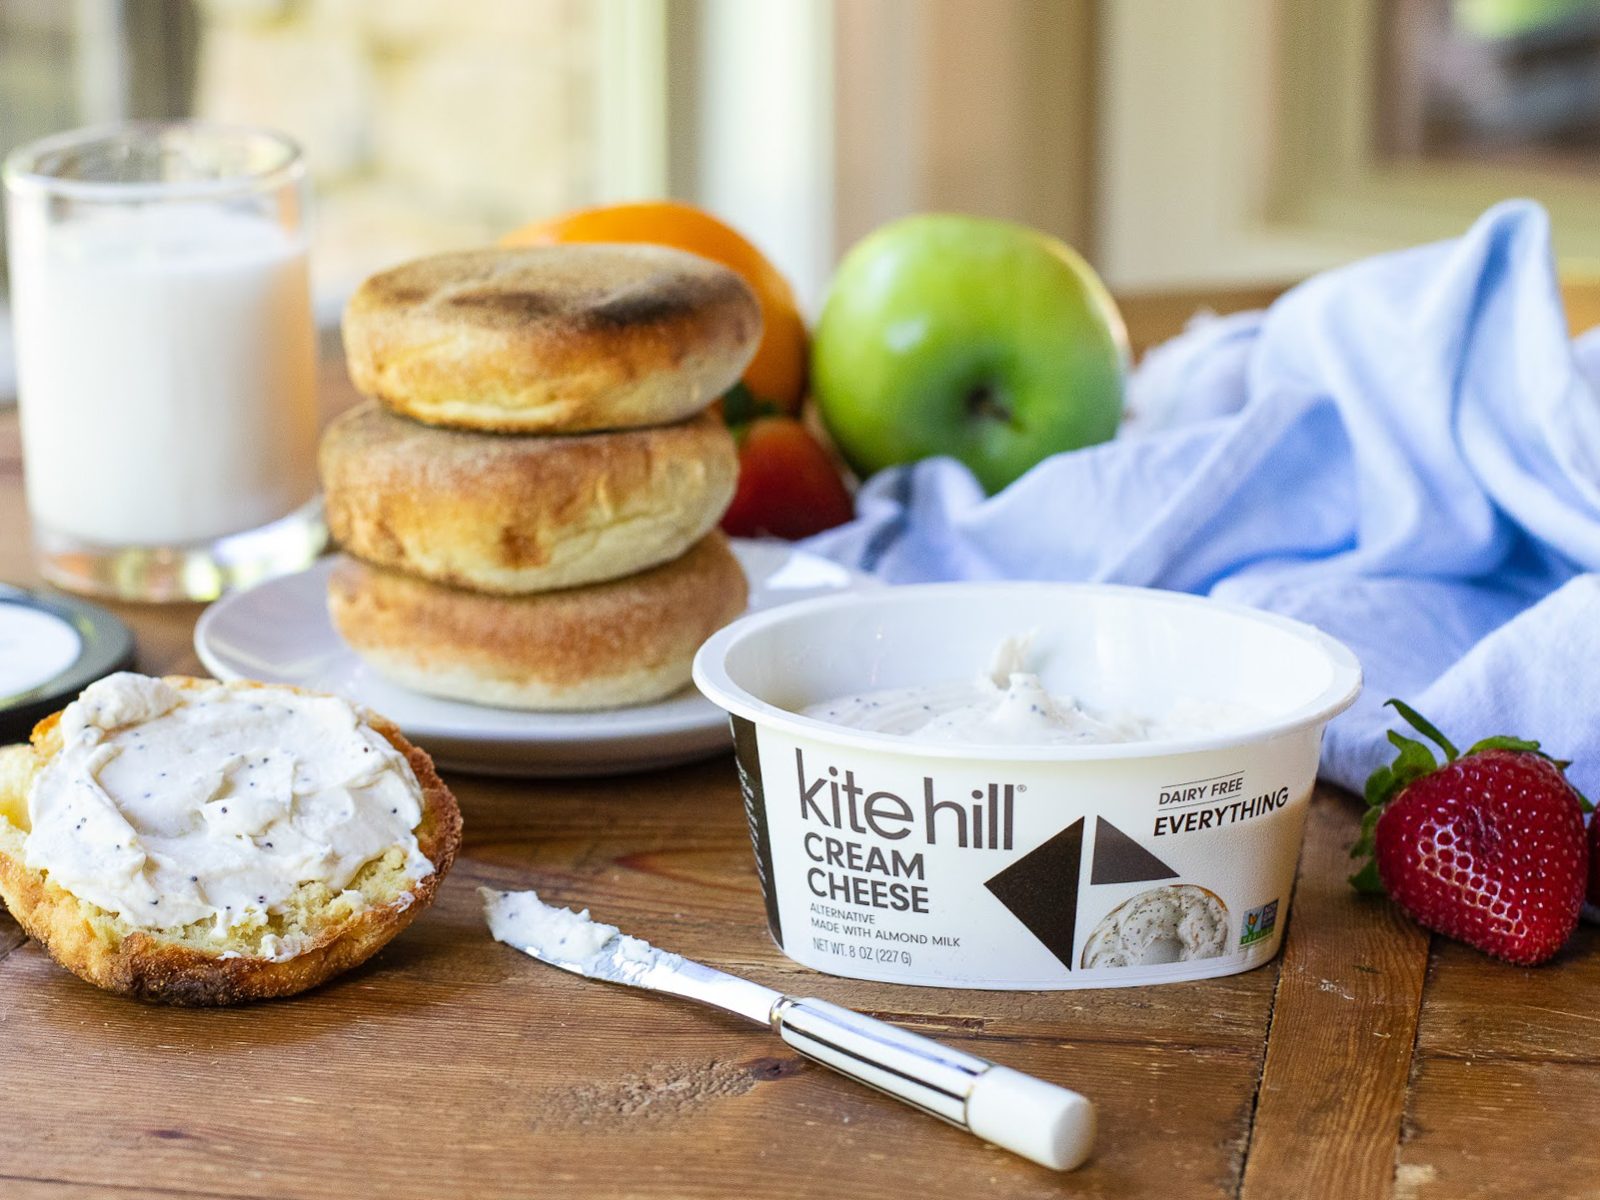 Kite Hill Dairy Free Cream Cheese Just $2 At Publix (Plus Cheap Yogurt)